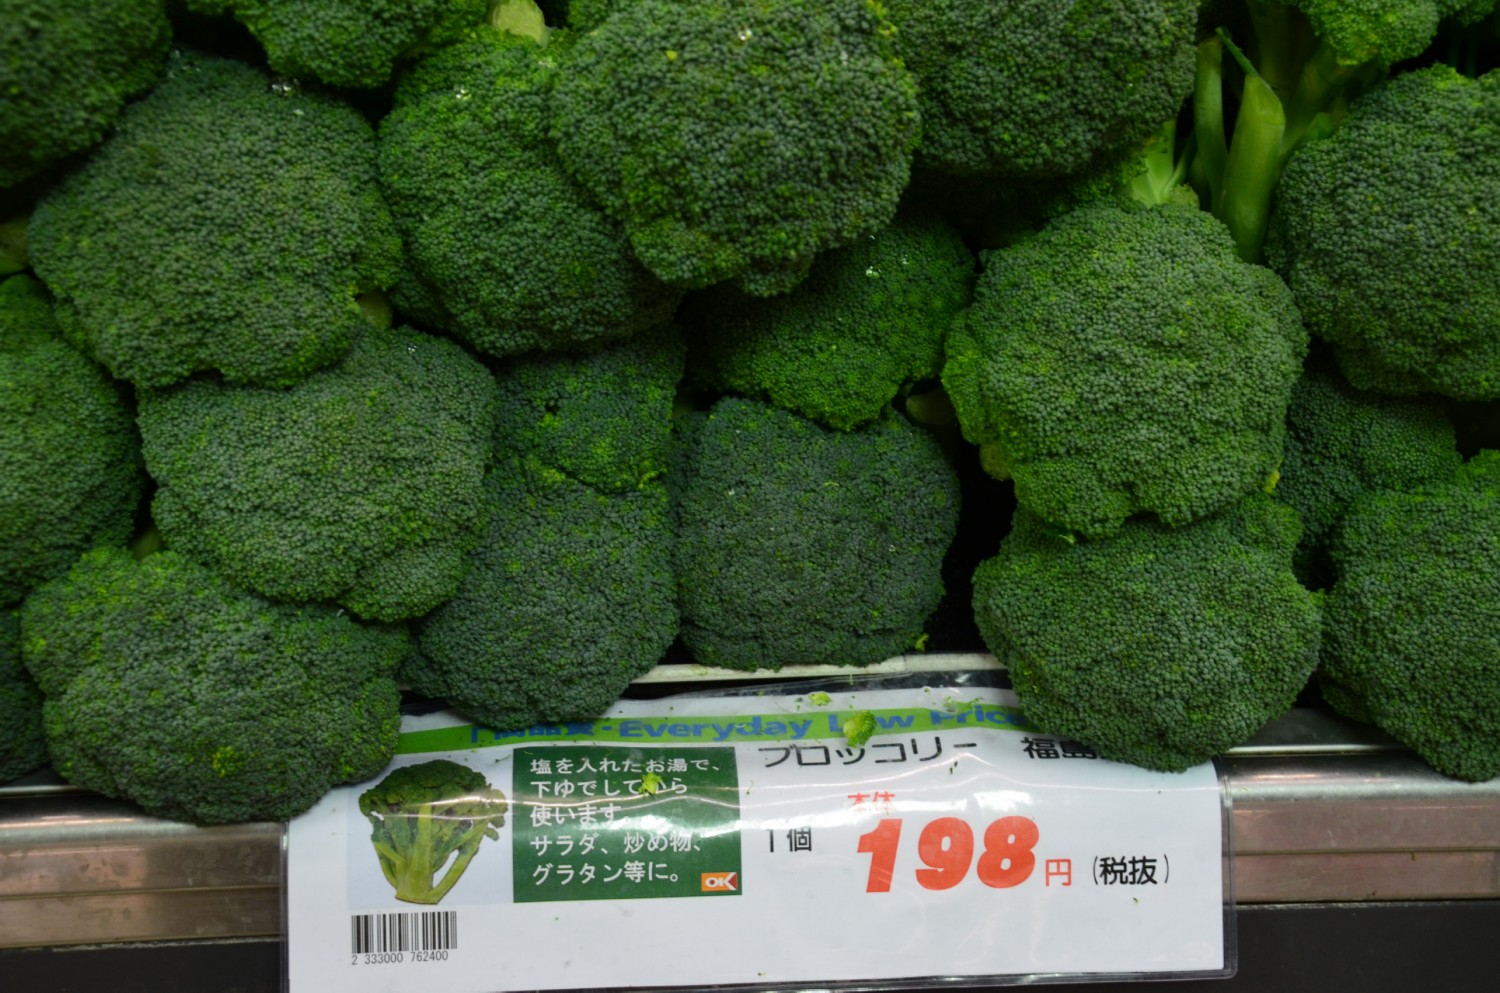 1 brokkoli 1.5 Euro